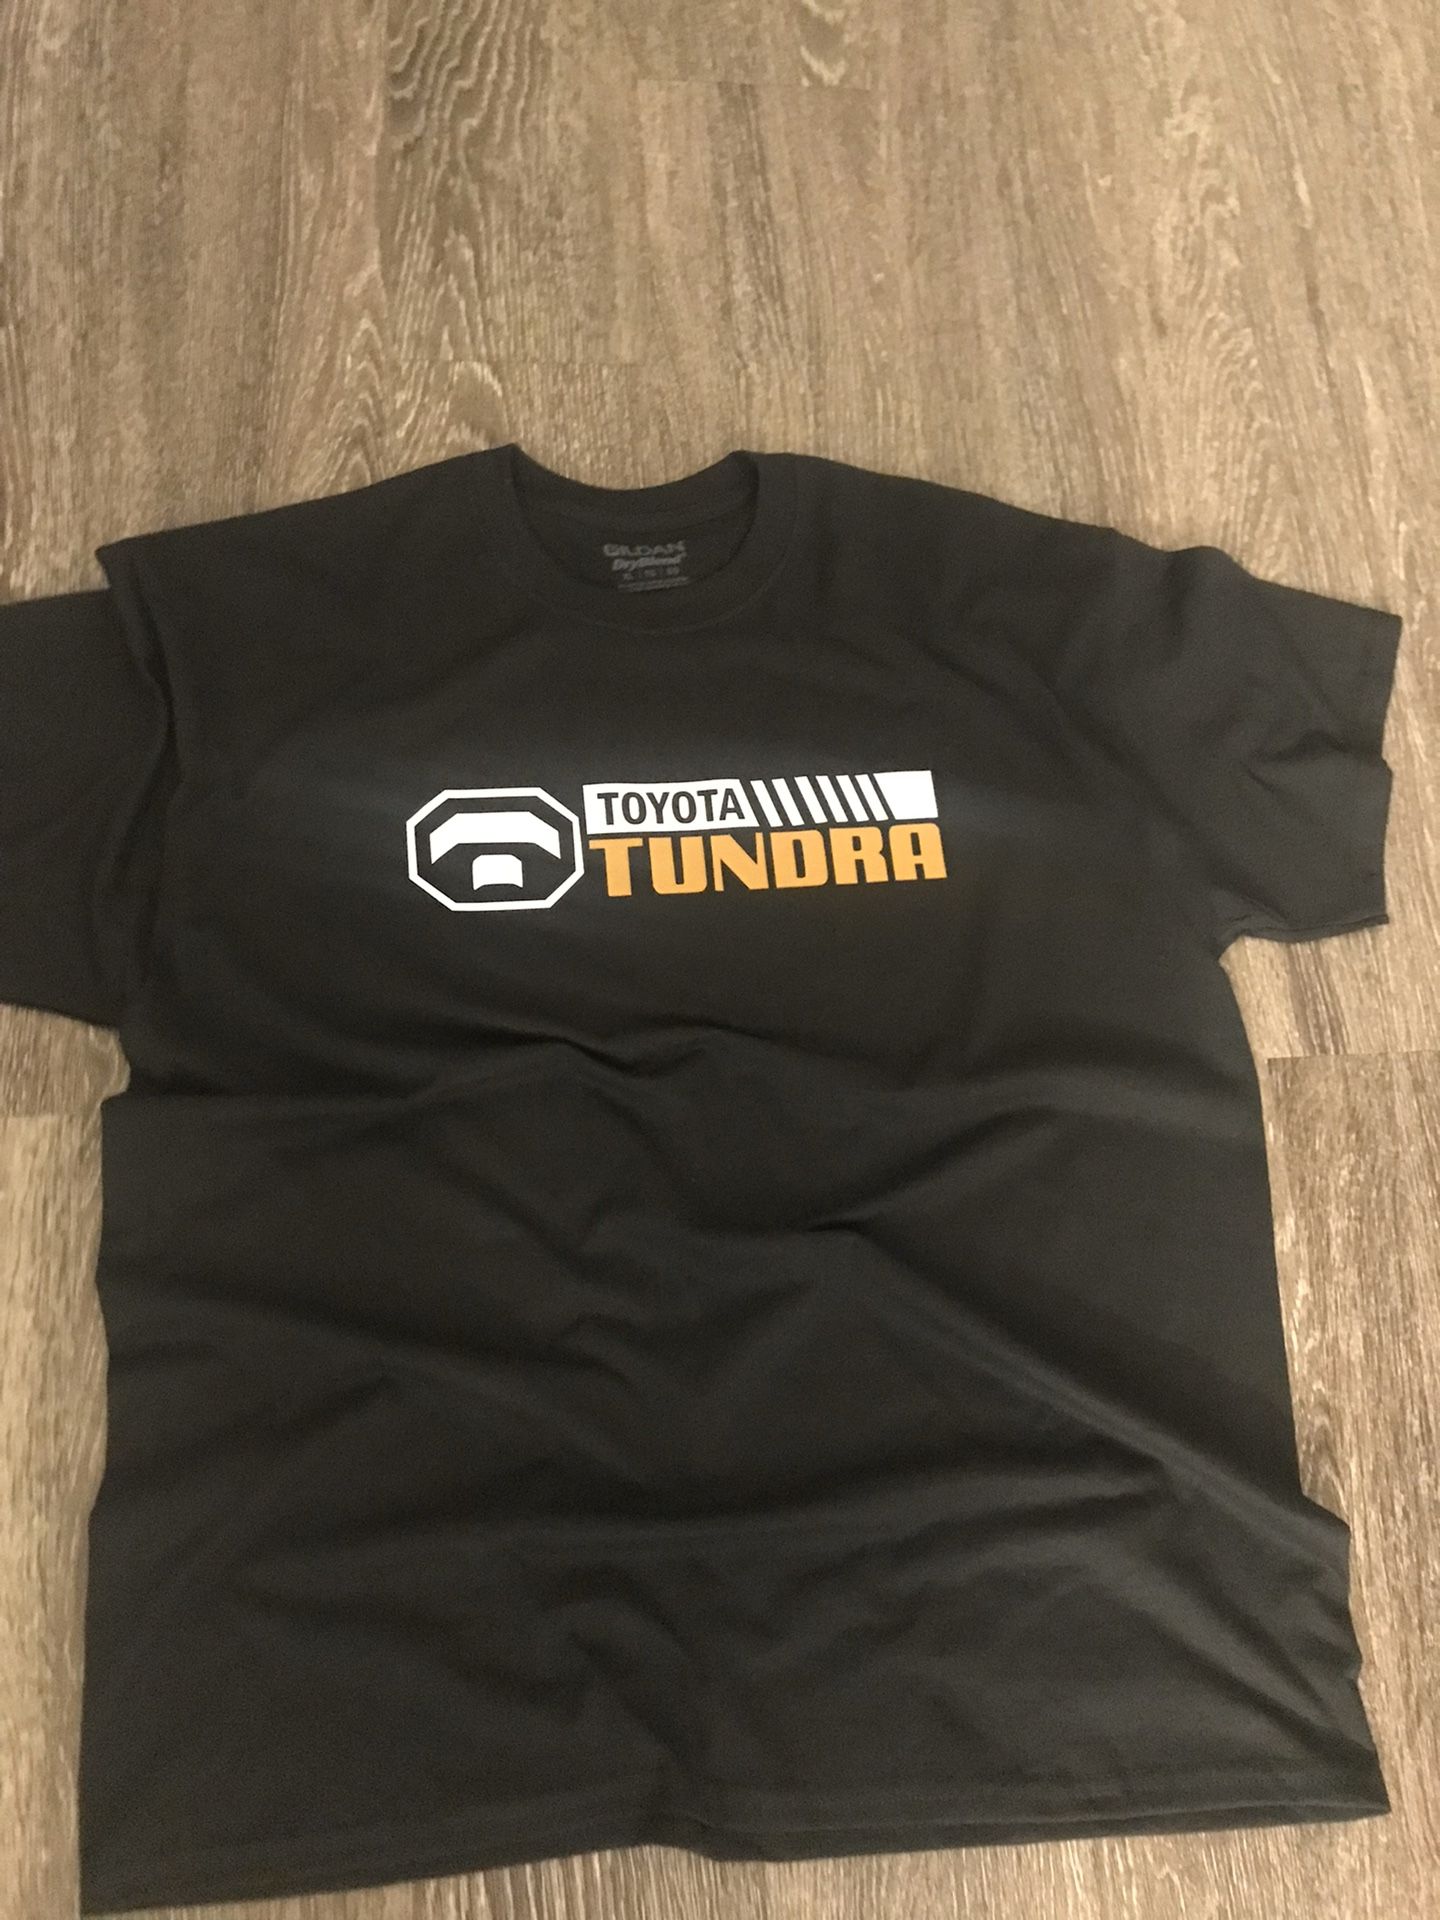 TUNDRA TOYOTA 2020 custom vinyl logo shirts sizes and colors